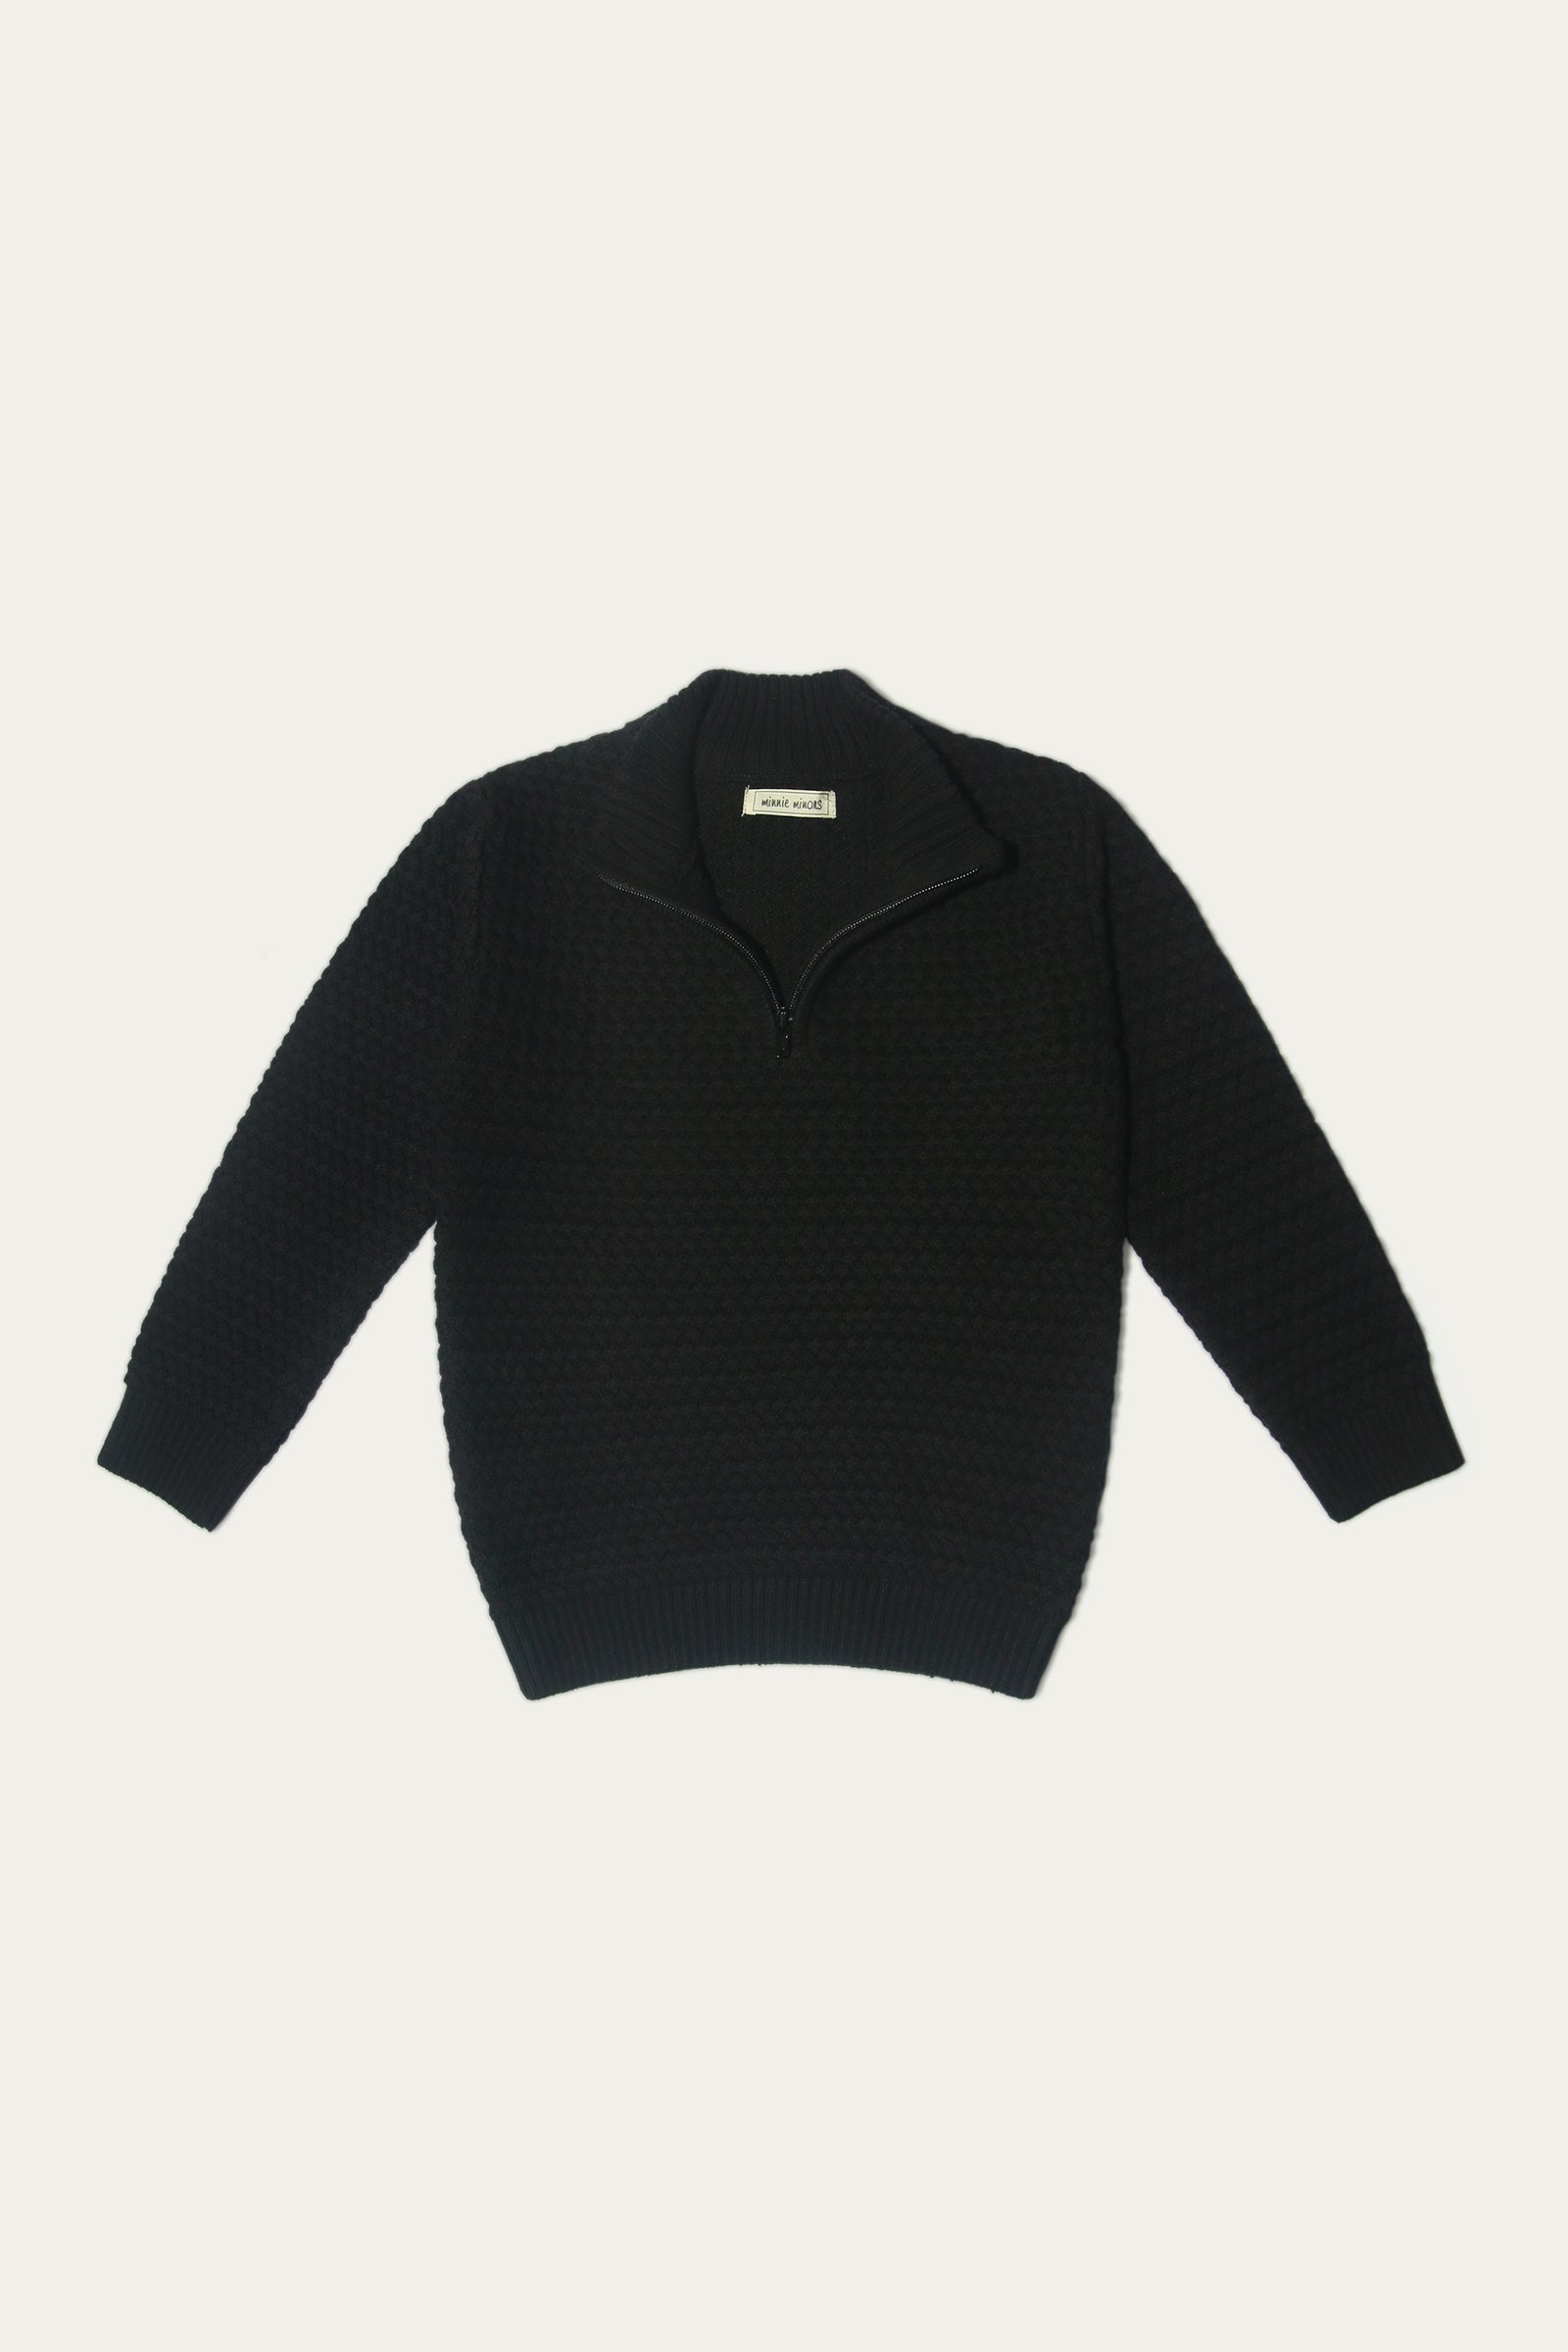 Zip Mock Sweater (MSBMMS-01)